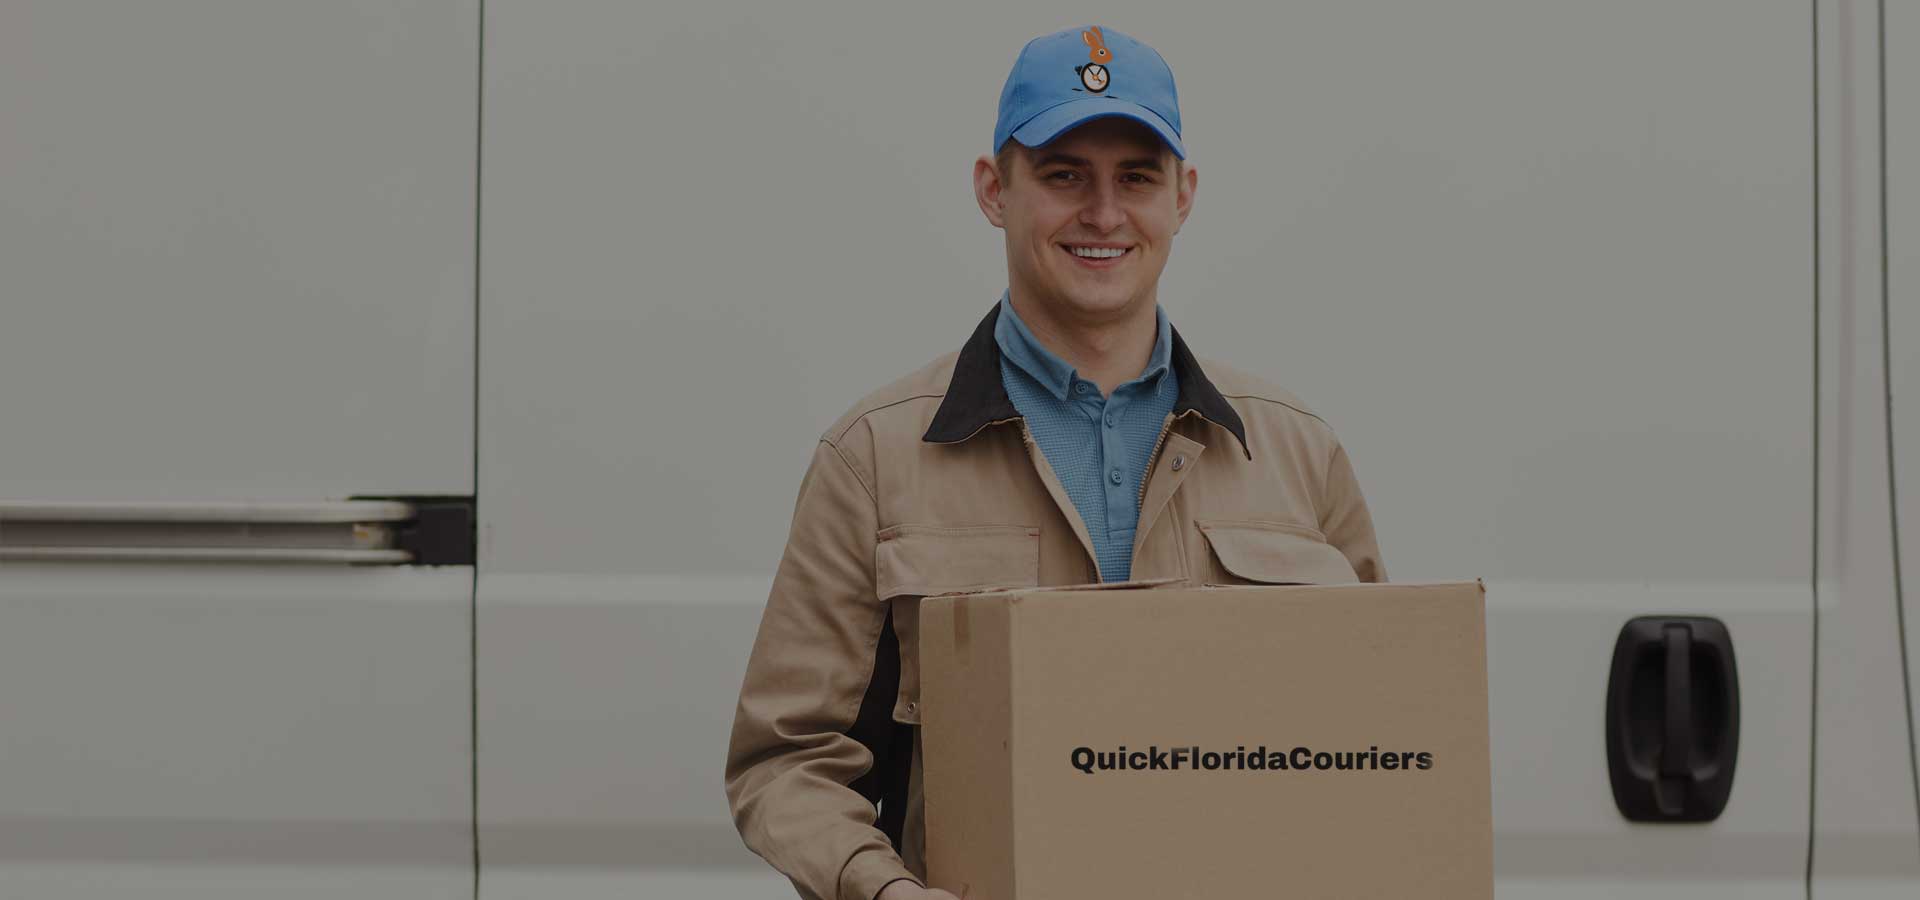 Quick Florida Couriers: Courier Services South Florida